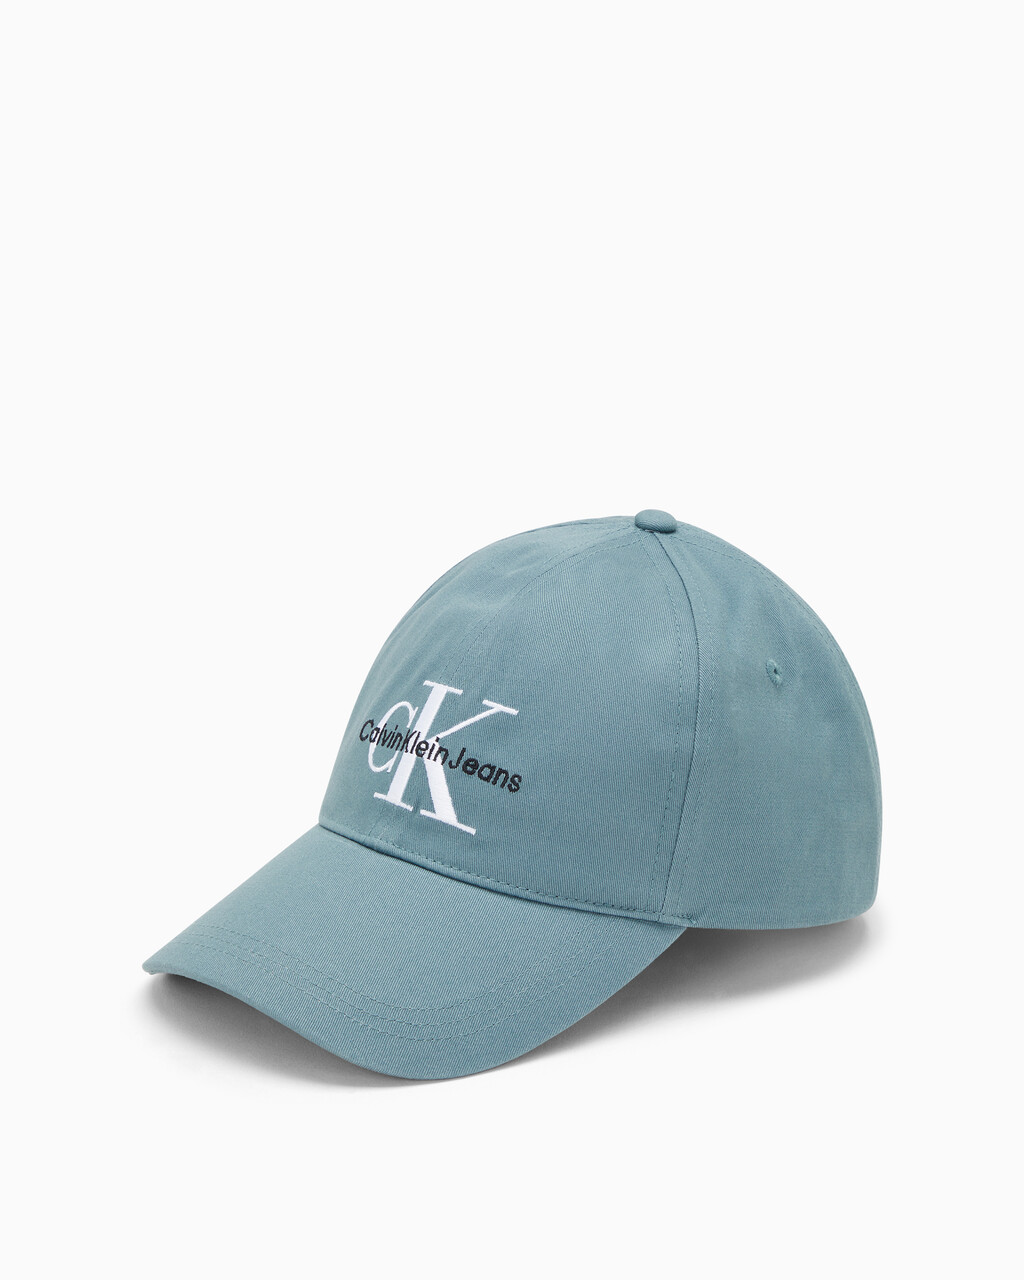 Monogram 棒球帽, GOBLIN BLUE, hi-res